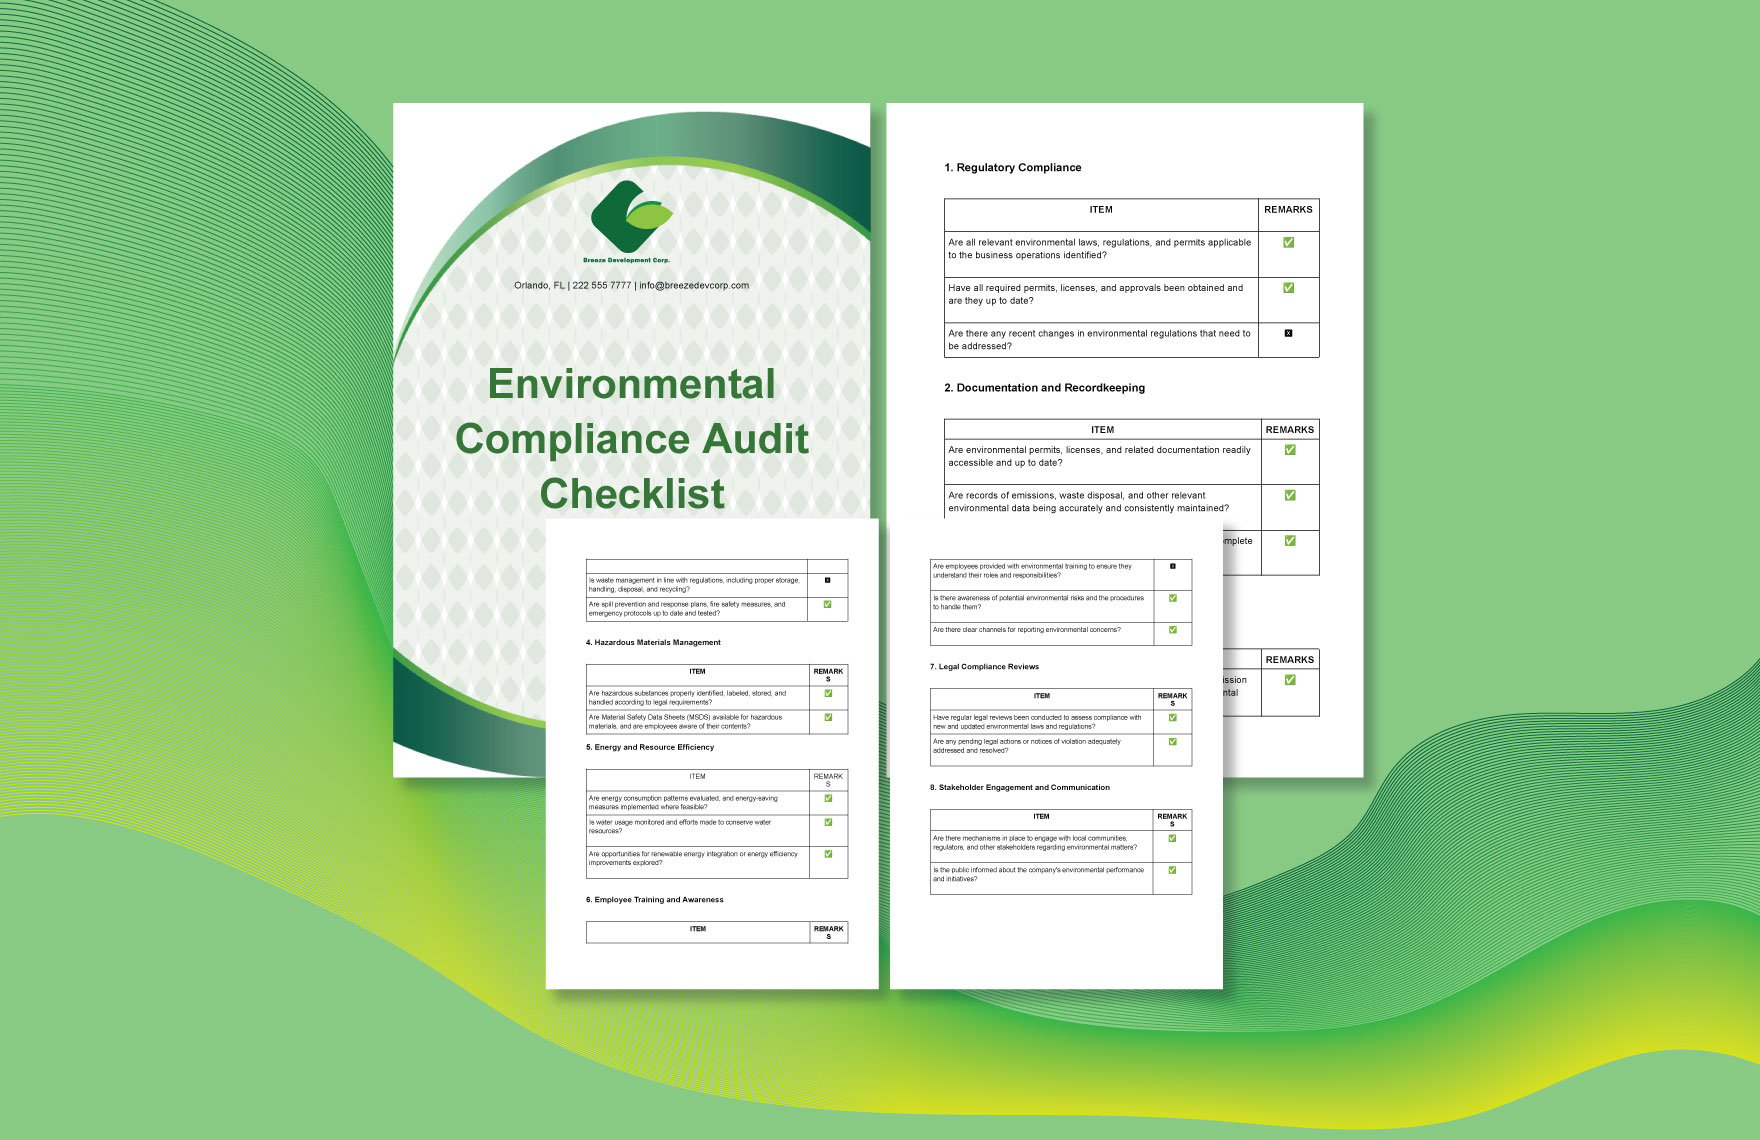 Environmental Compliance Audit Checklist Template